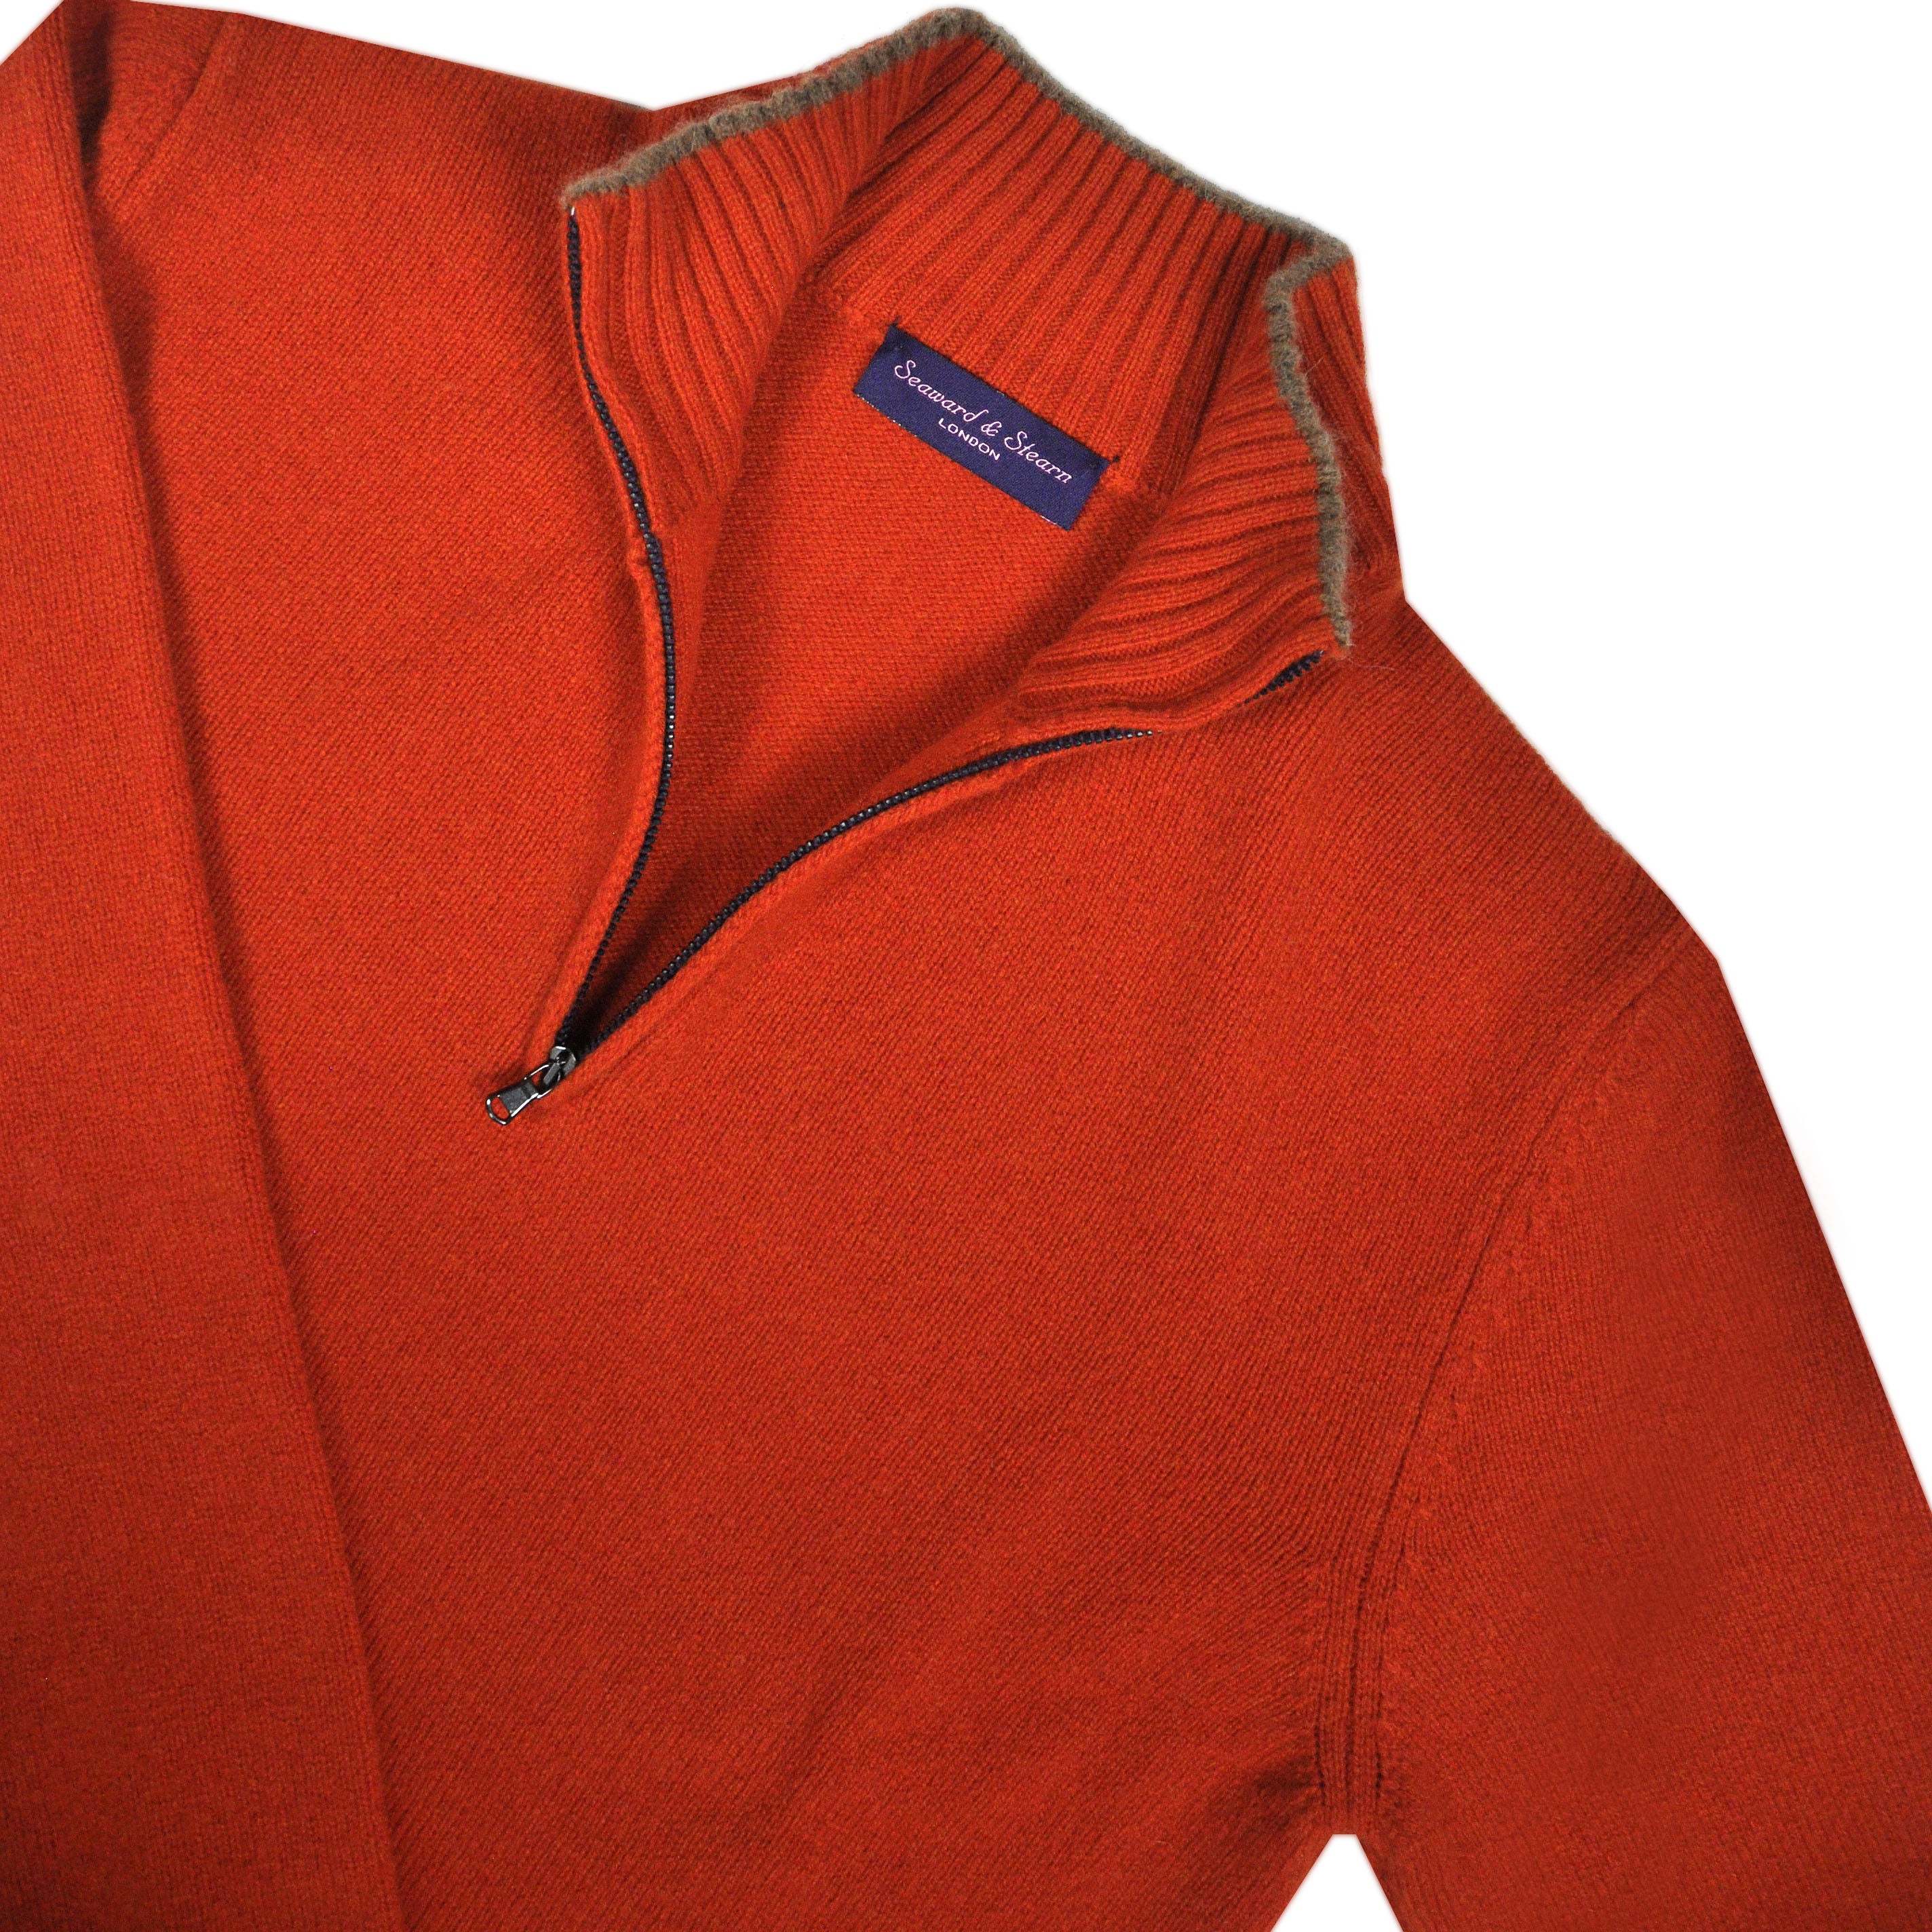 Merino Wool Quarter Zip Jumper in Rusty Orange with Bieige Trim